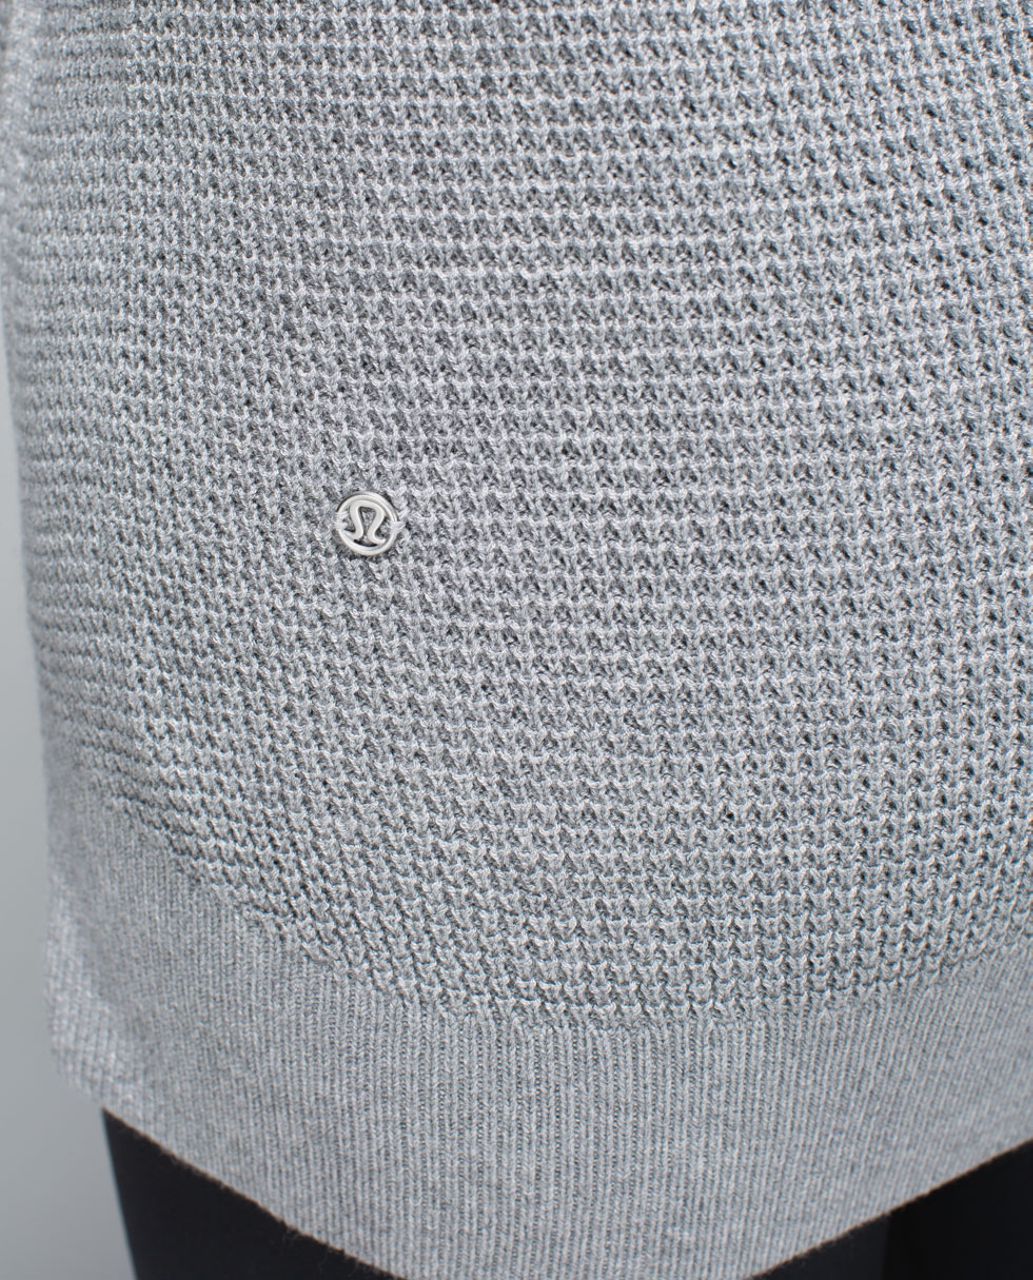 Lululemon The Sweater Life - Heathered Medium Grey